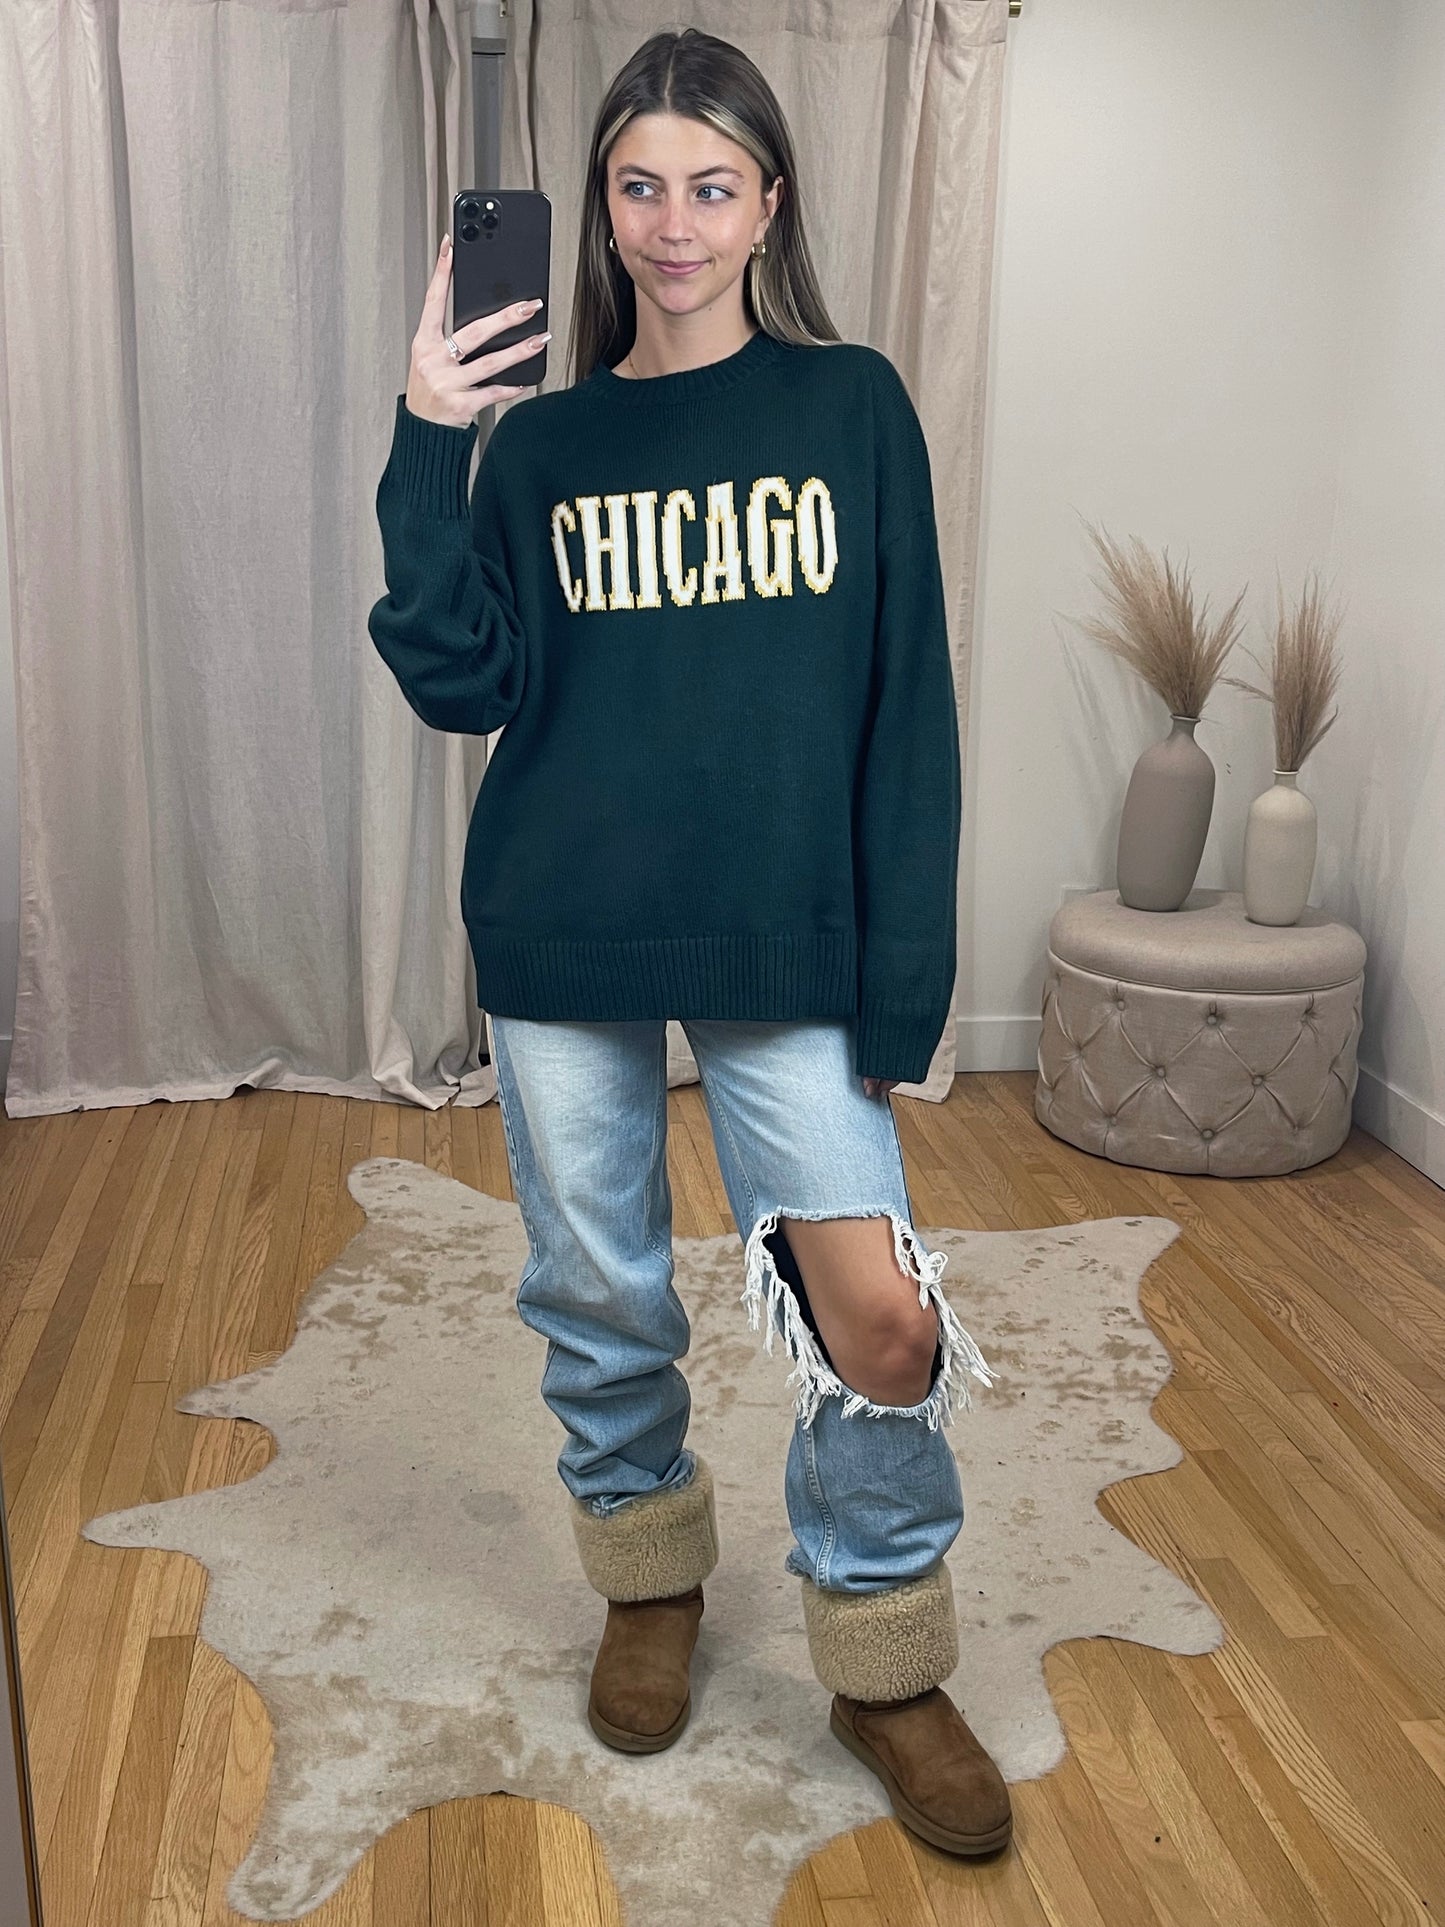 Chicago Sweater